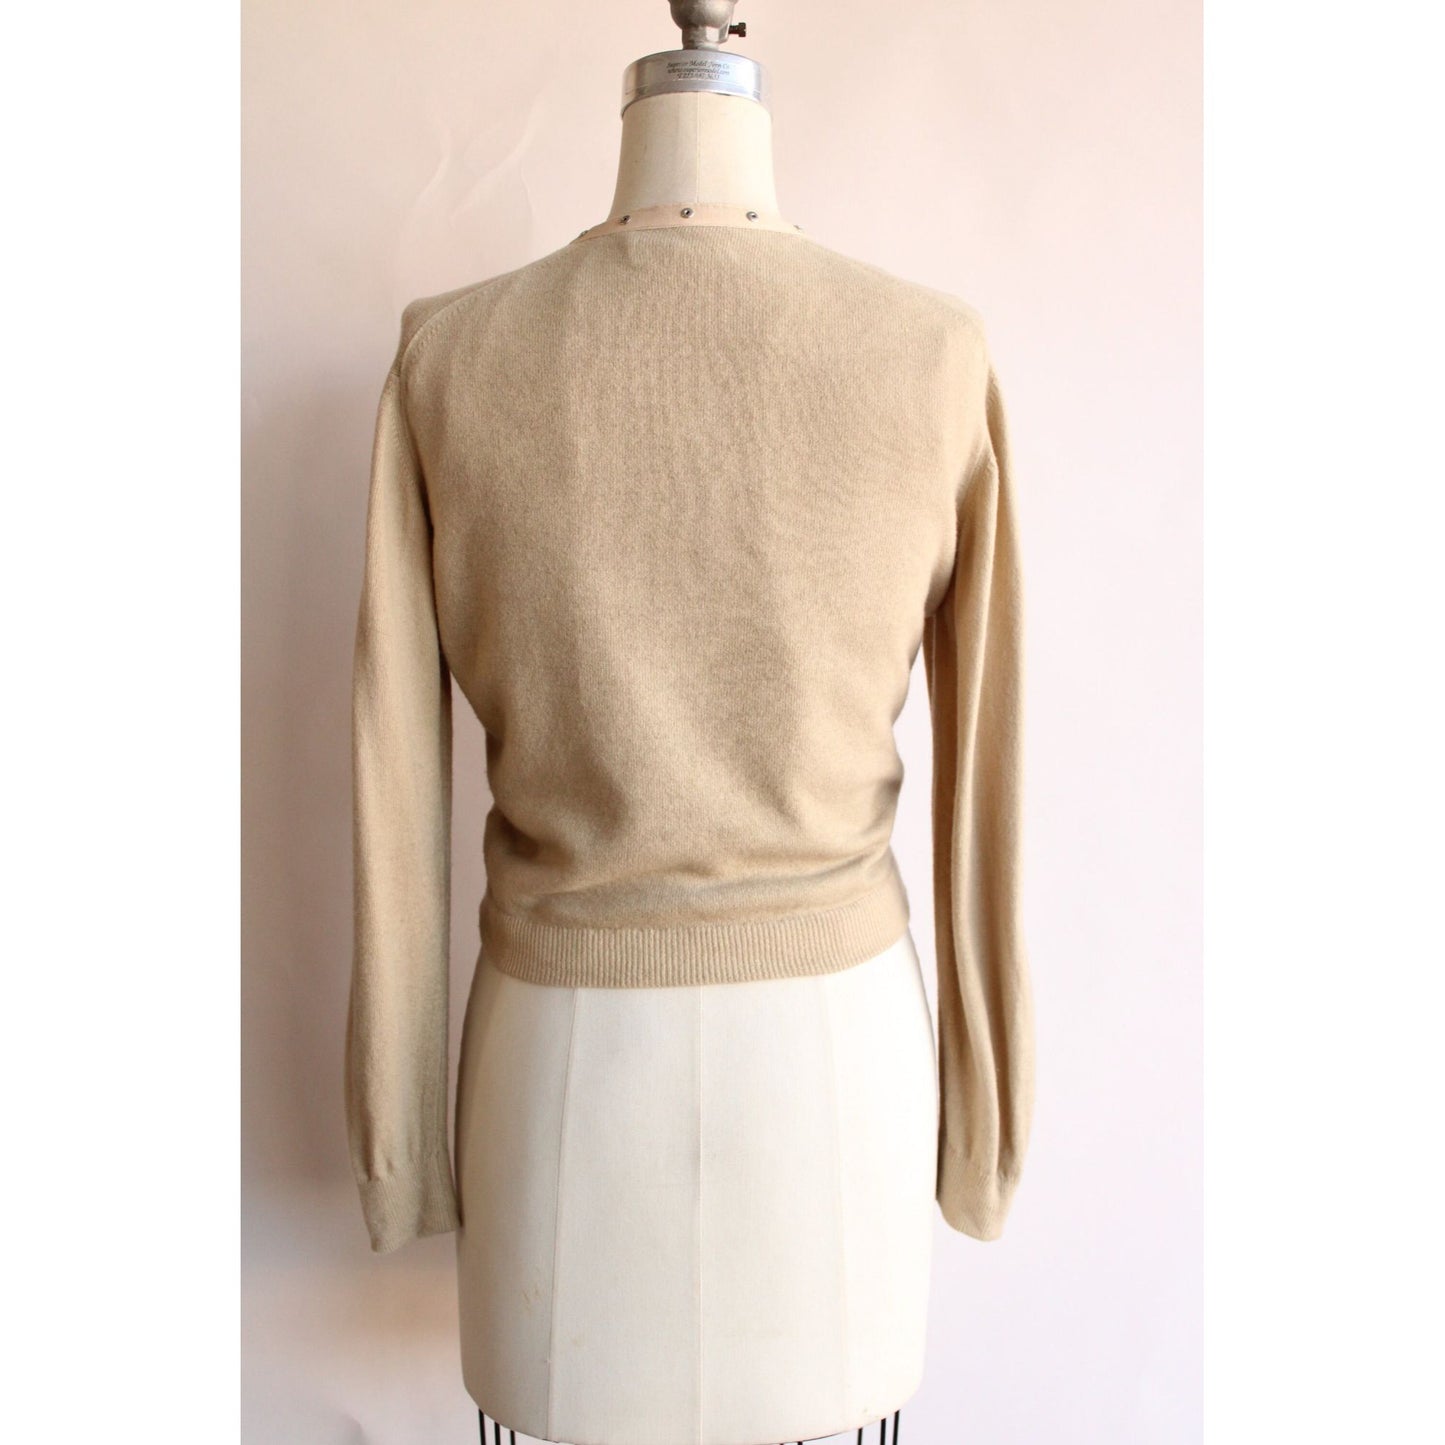 Vintage 1960s Beige Wool Angora Sweater with Rhinestones